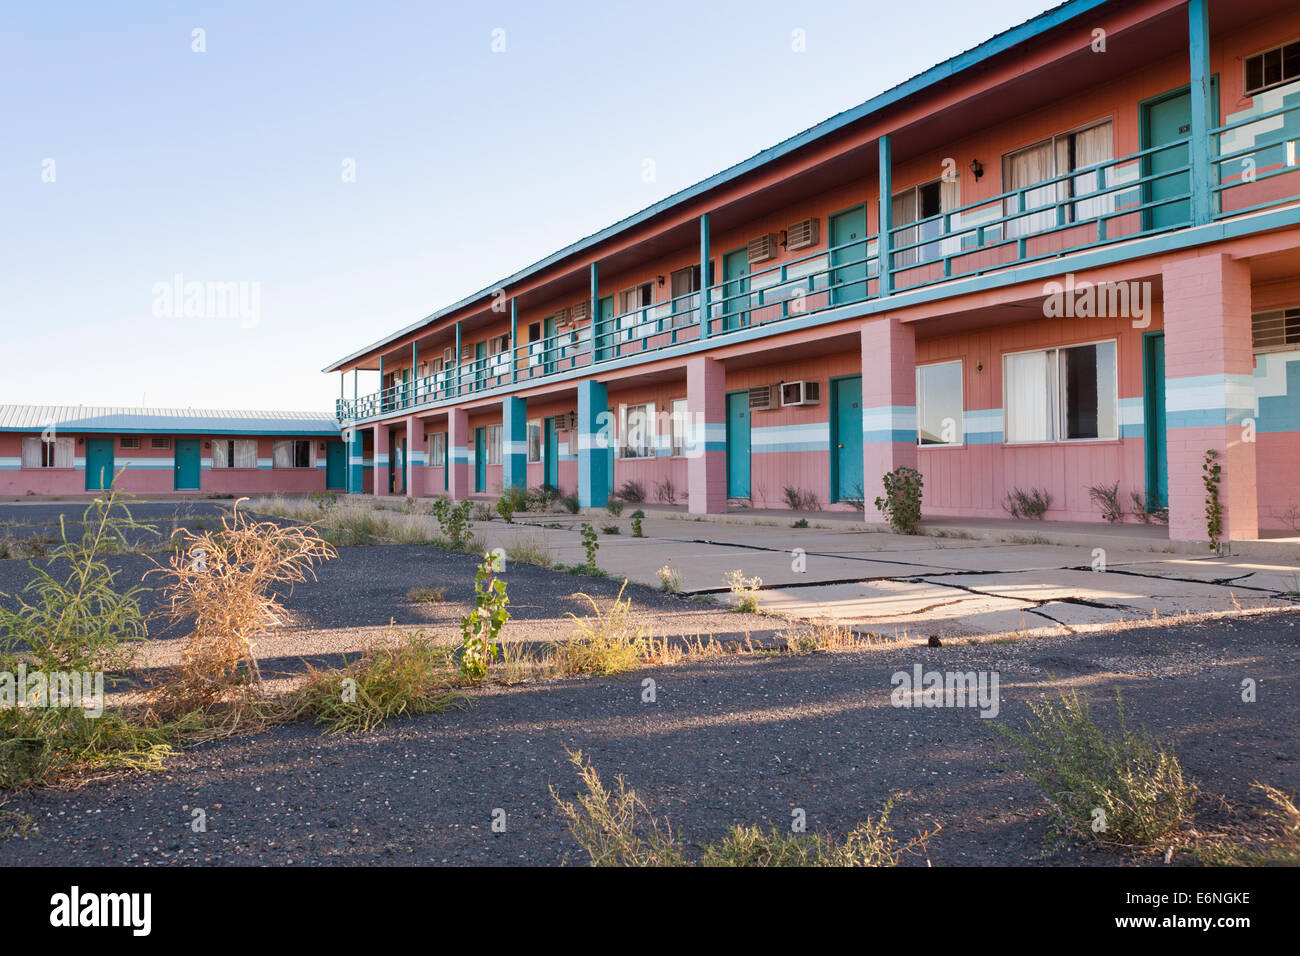 Abandonado motel (edificio abandonado) - Arizona, EE.UU. Foto de stock